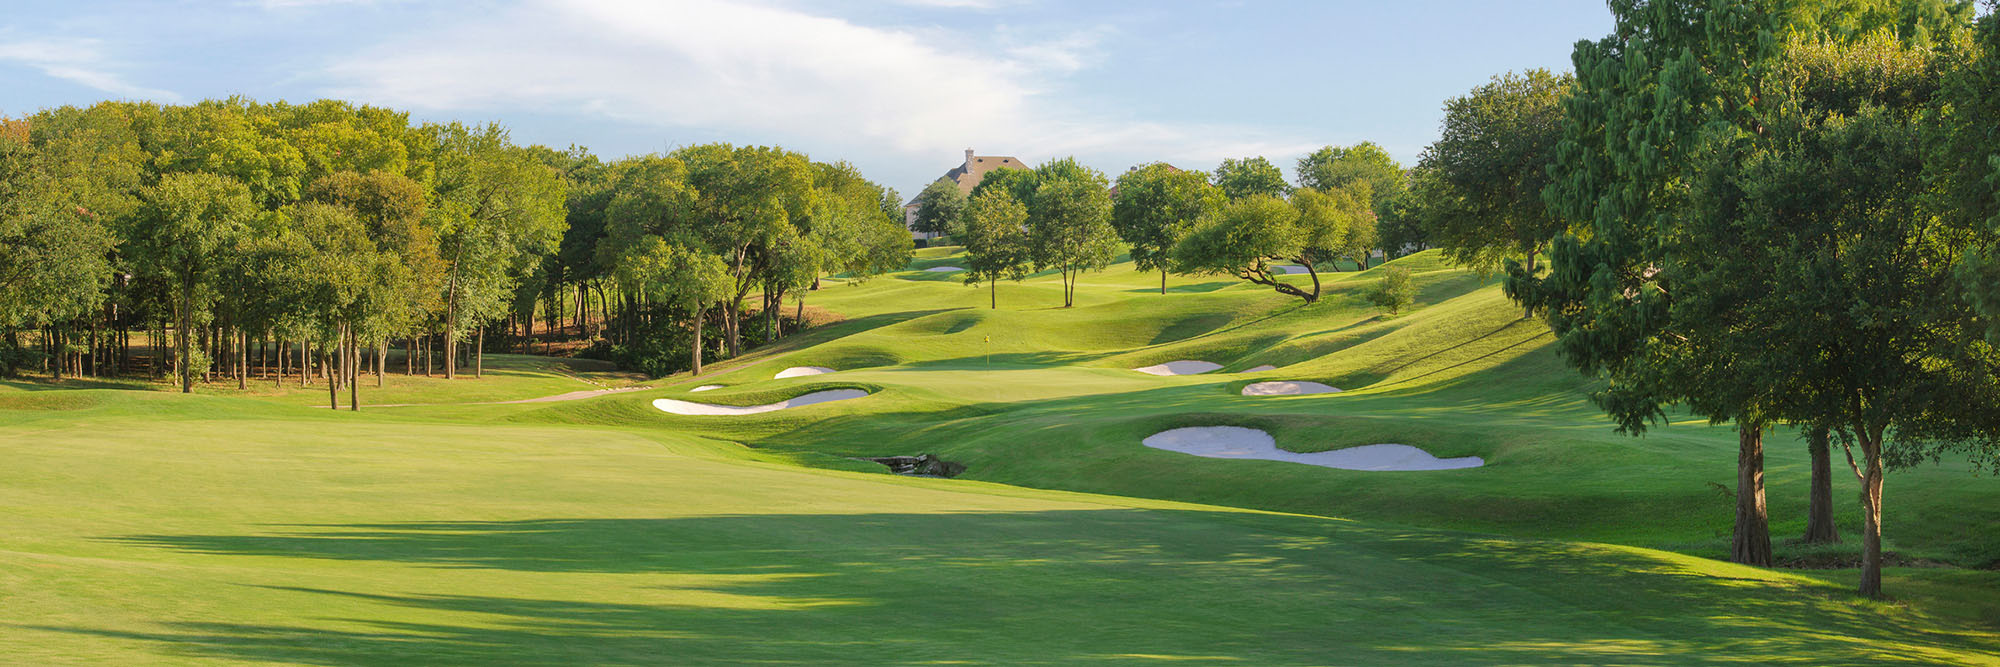 Golf Course Image - Mira Vista No. 11